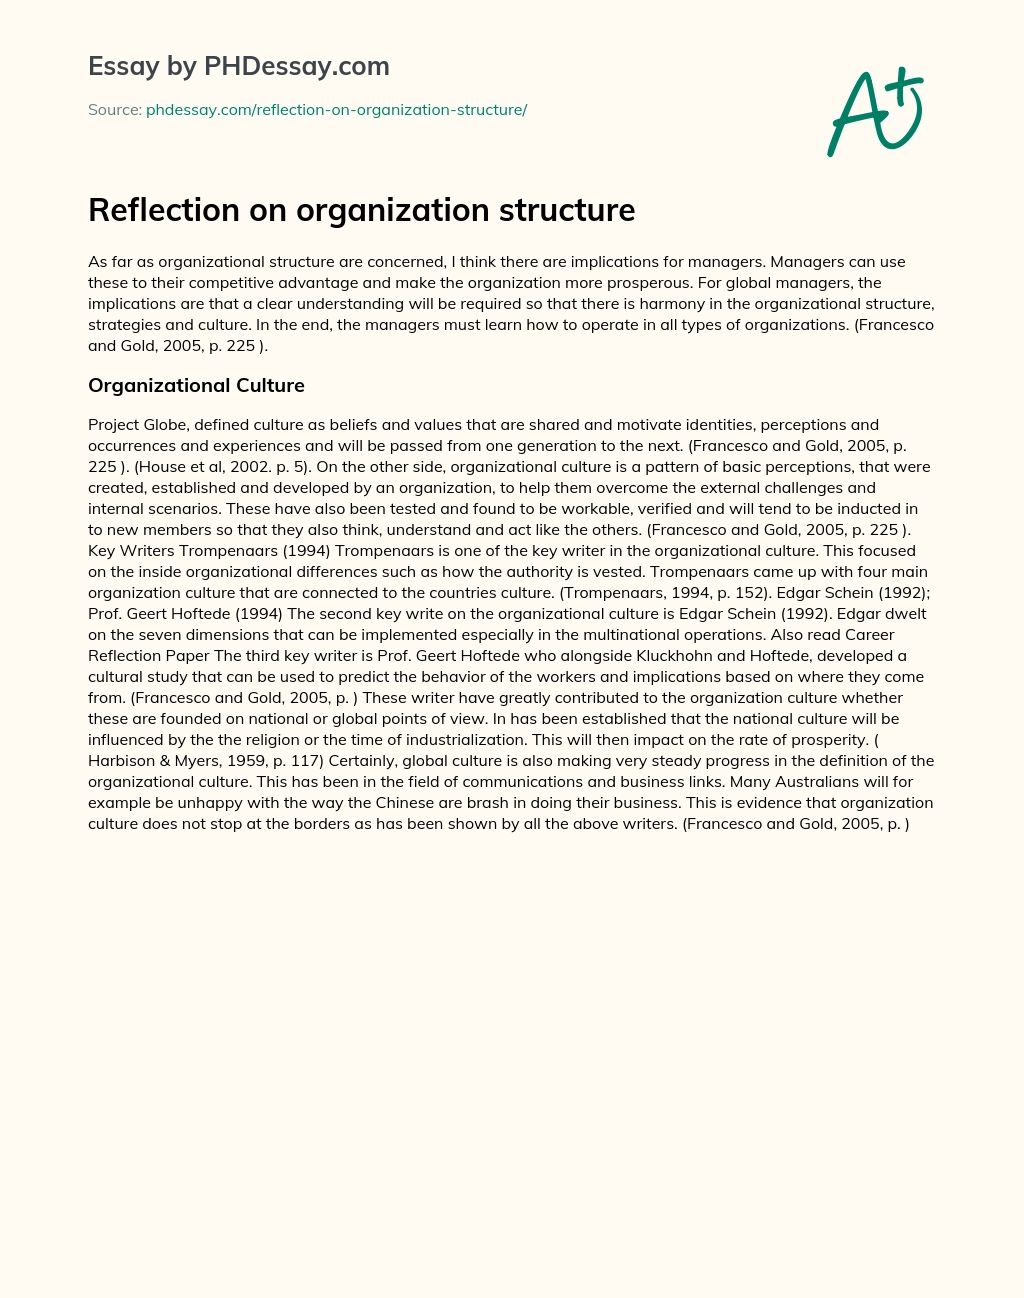 Reflection on organization structure essay